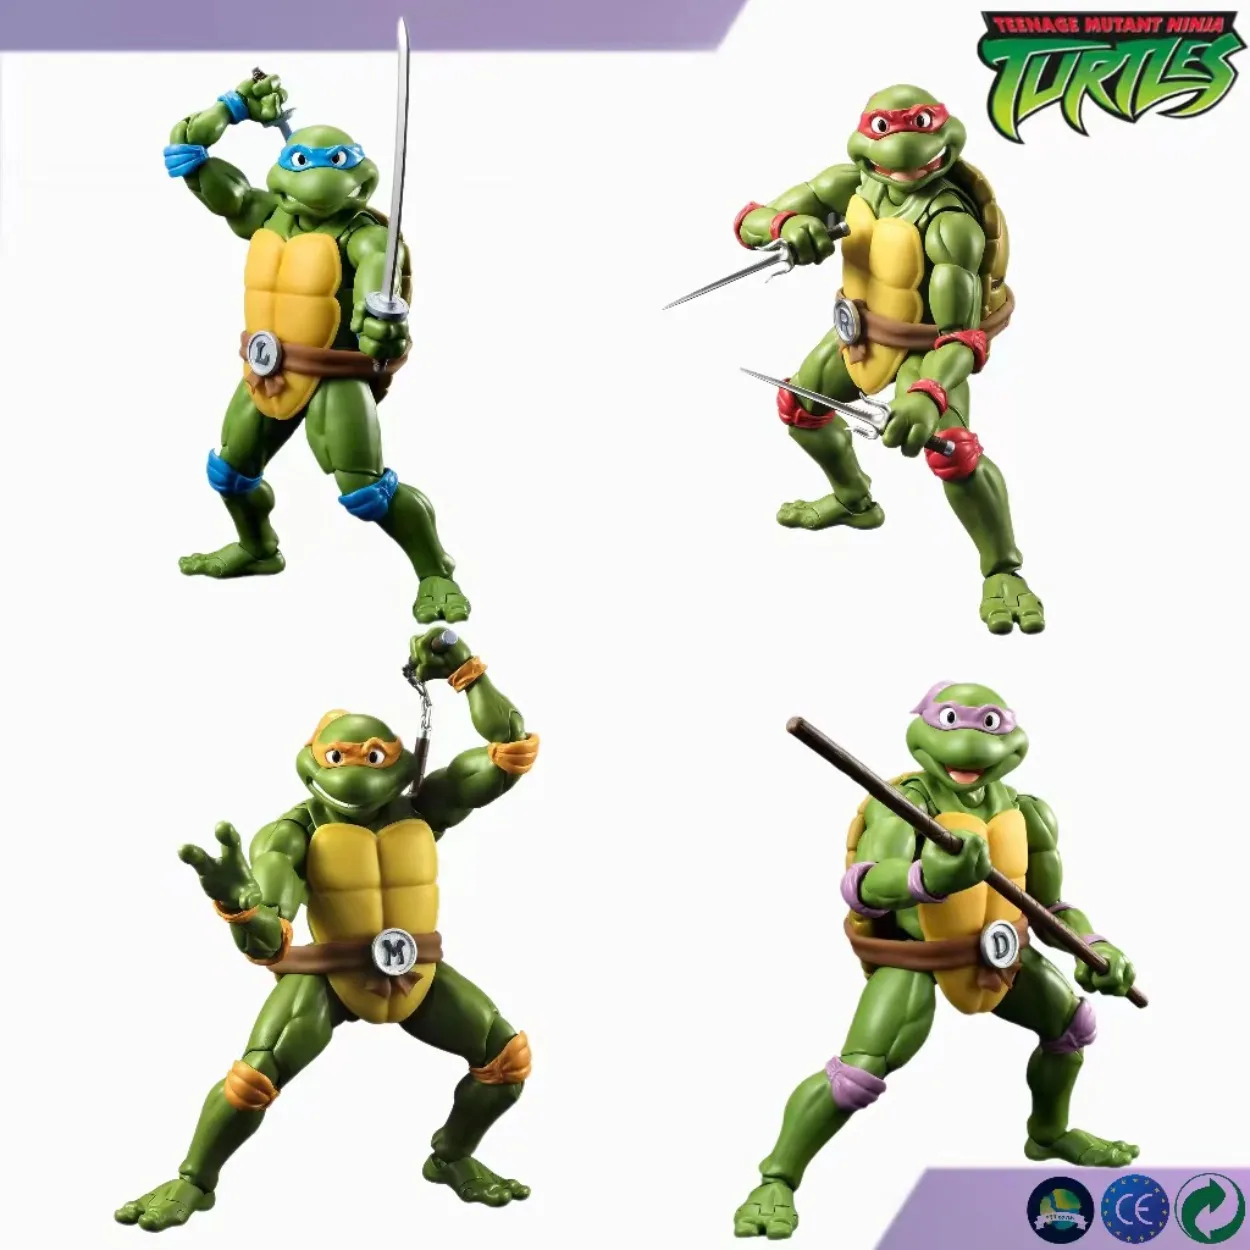 

14cm SHF TMNT Action Figure Don Leonardo Raph Figure Collection Anime Teenage Mutant Ninja Turtles Figurine Toys Model for Gifts